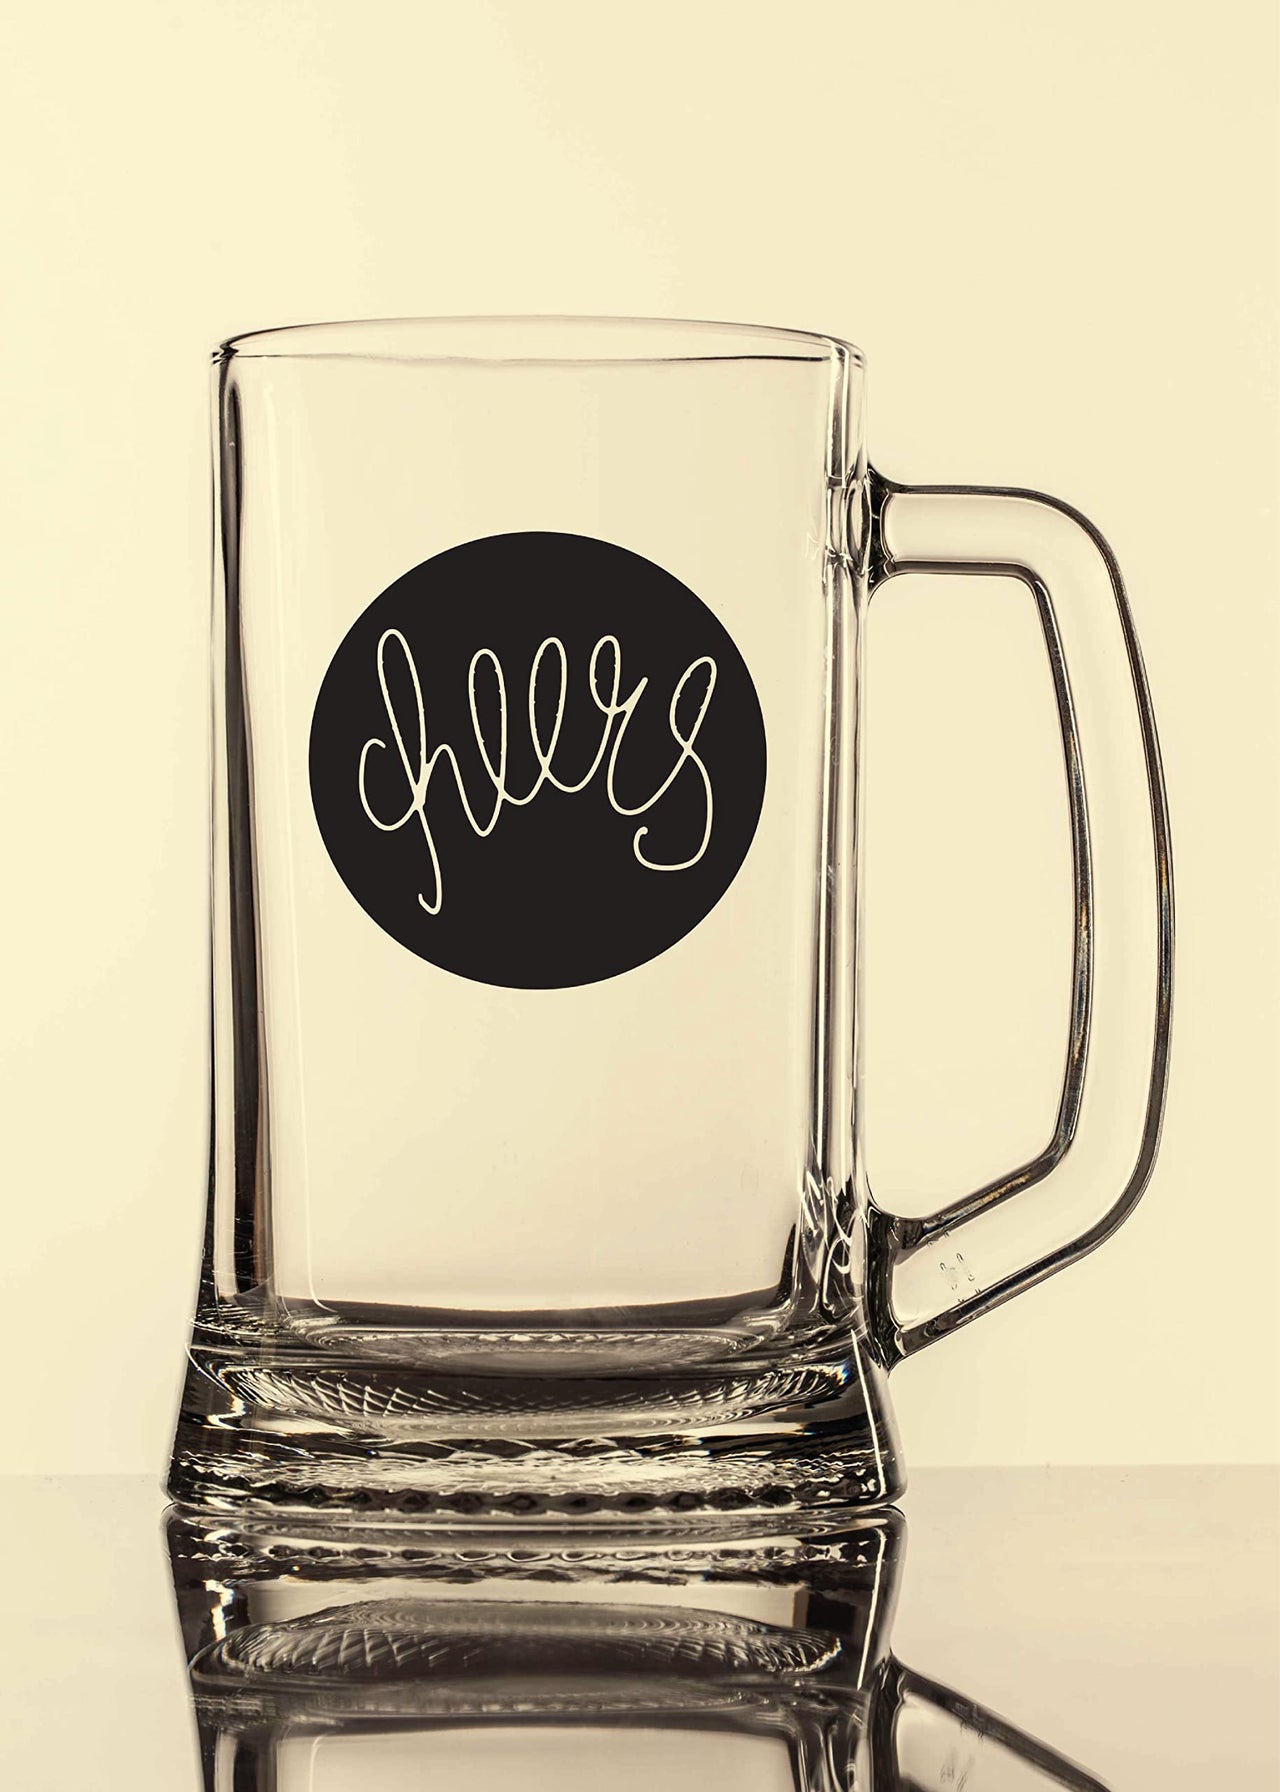 Cheers - Beer Mug - 1 Piece, Clear, 500 ml - Premium Transparent Glass Beer Mug -Printed Beer Mug with Handle Gift for Men